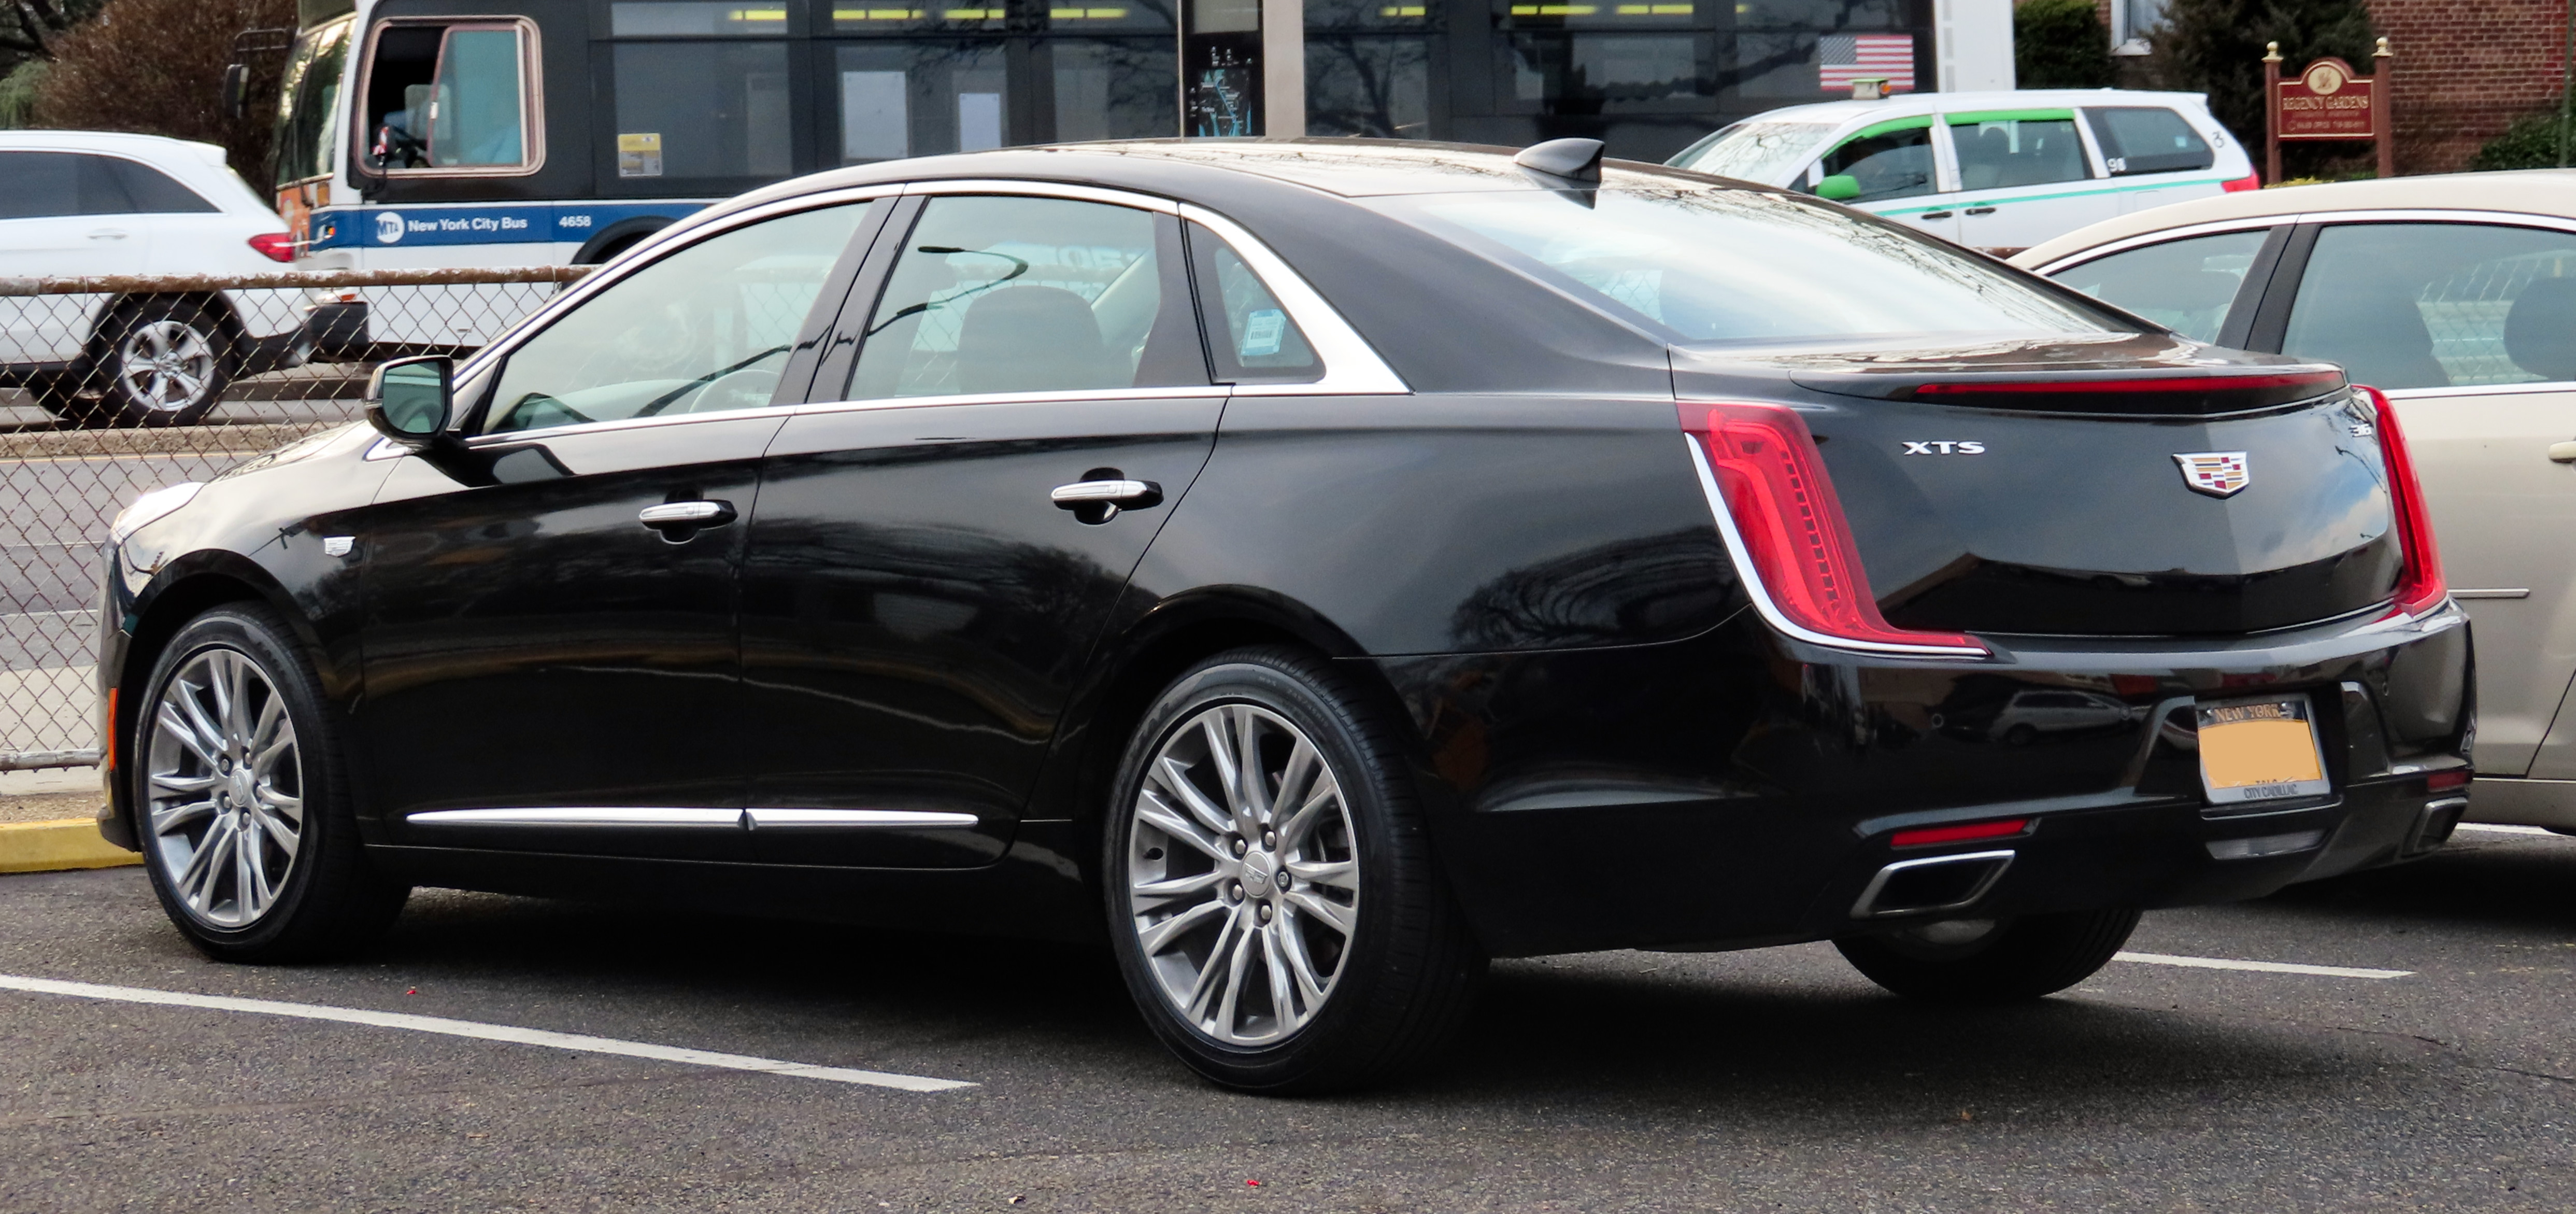 File:2019 Cadillac XTS, rear 2.24.20.jpg - Wikimedia Commons